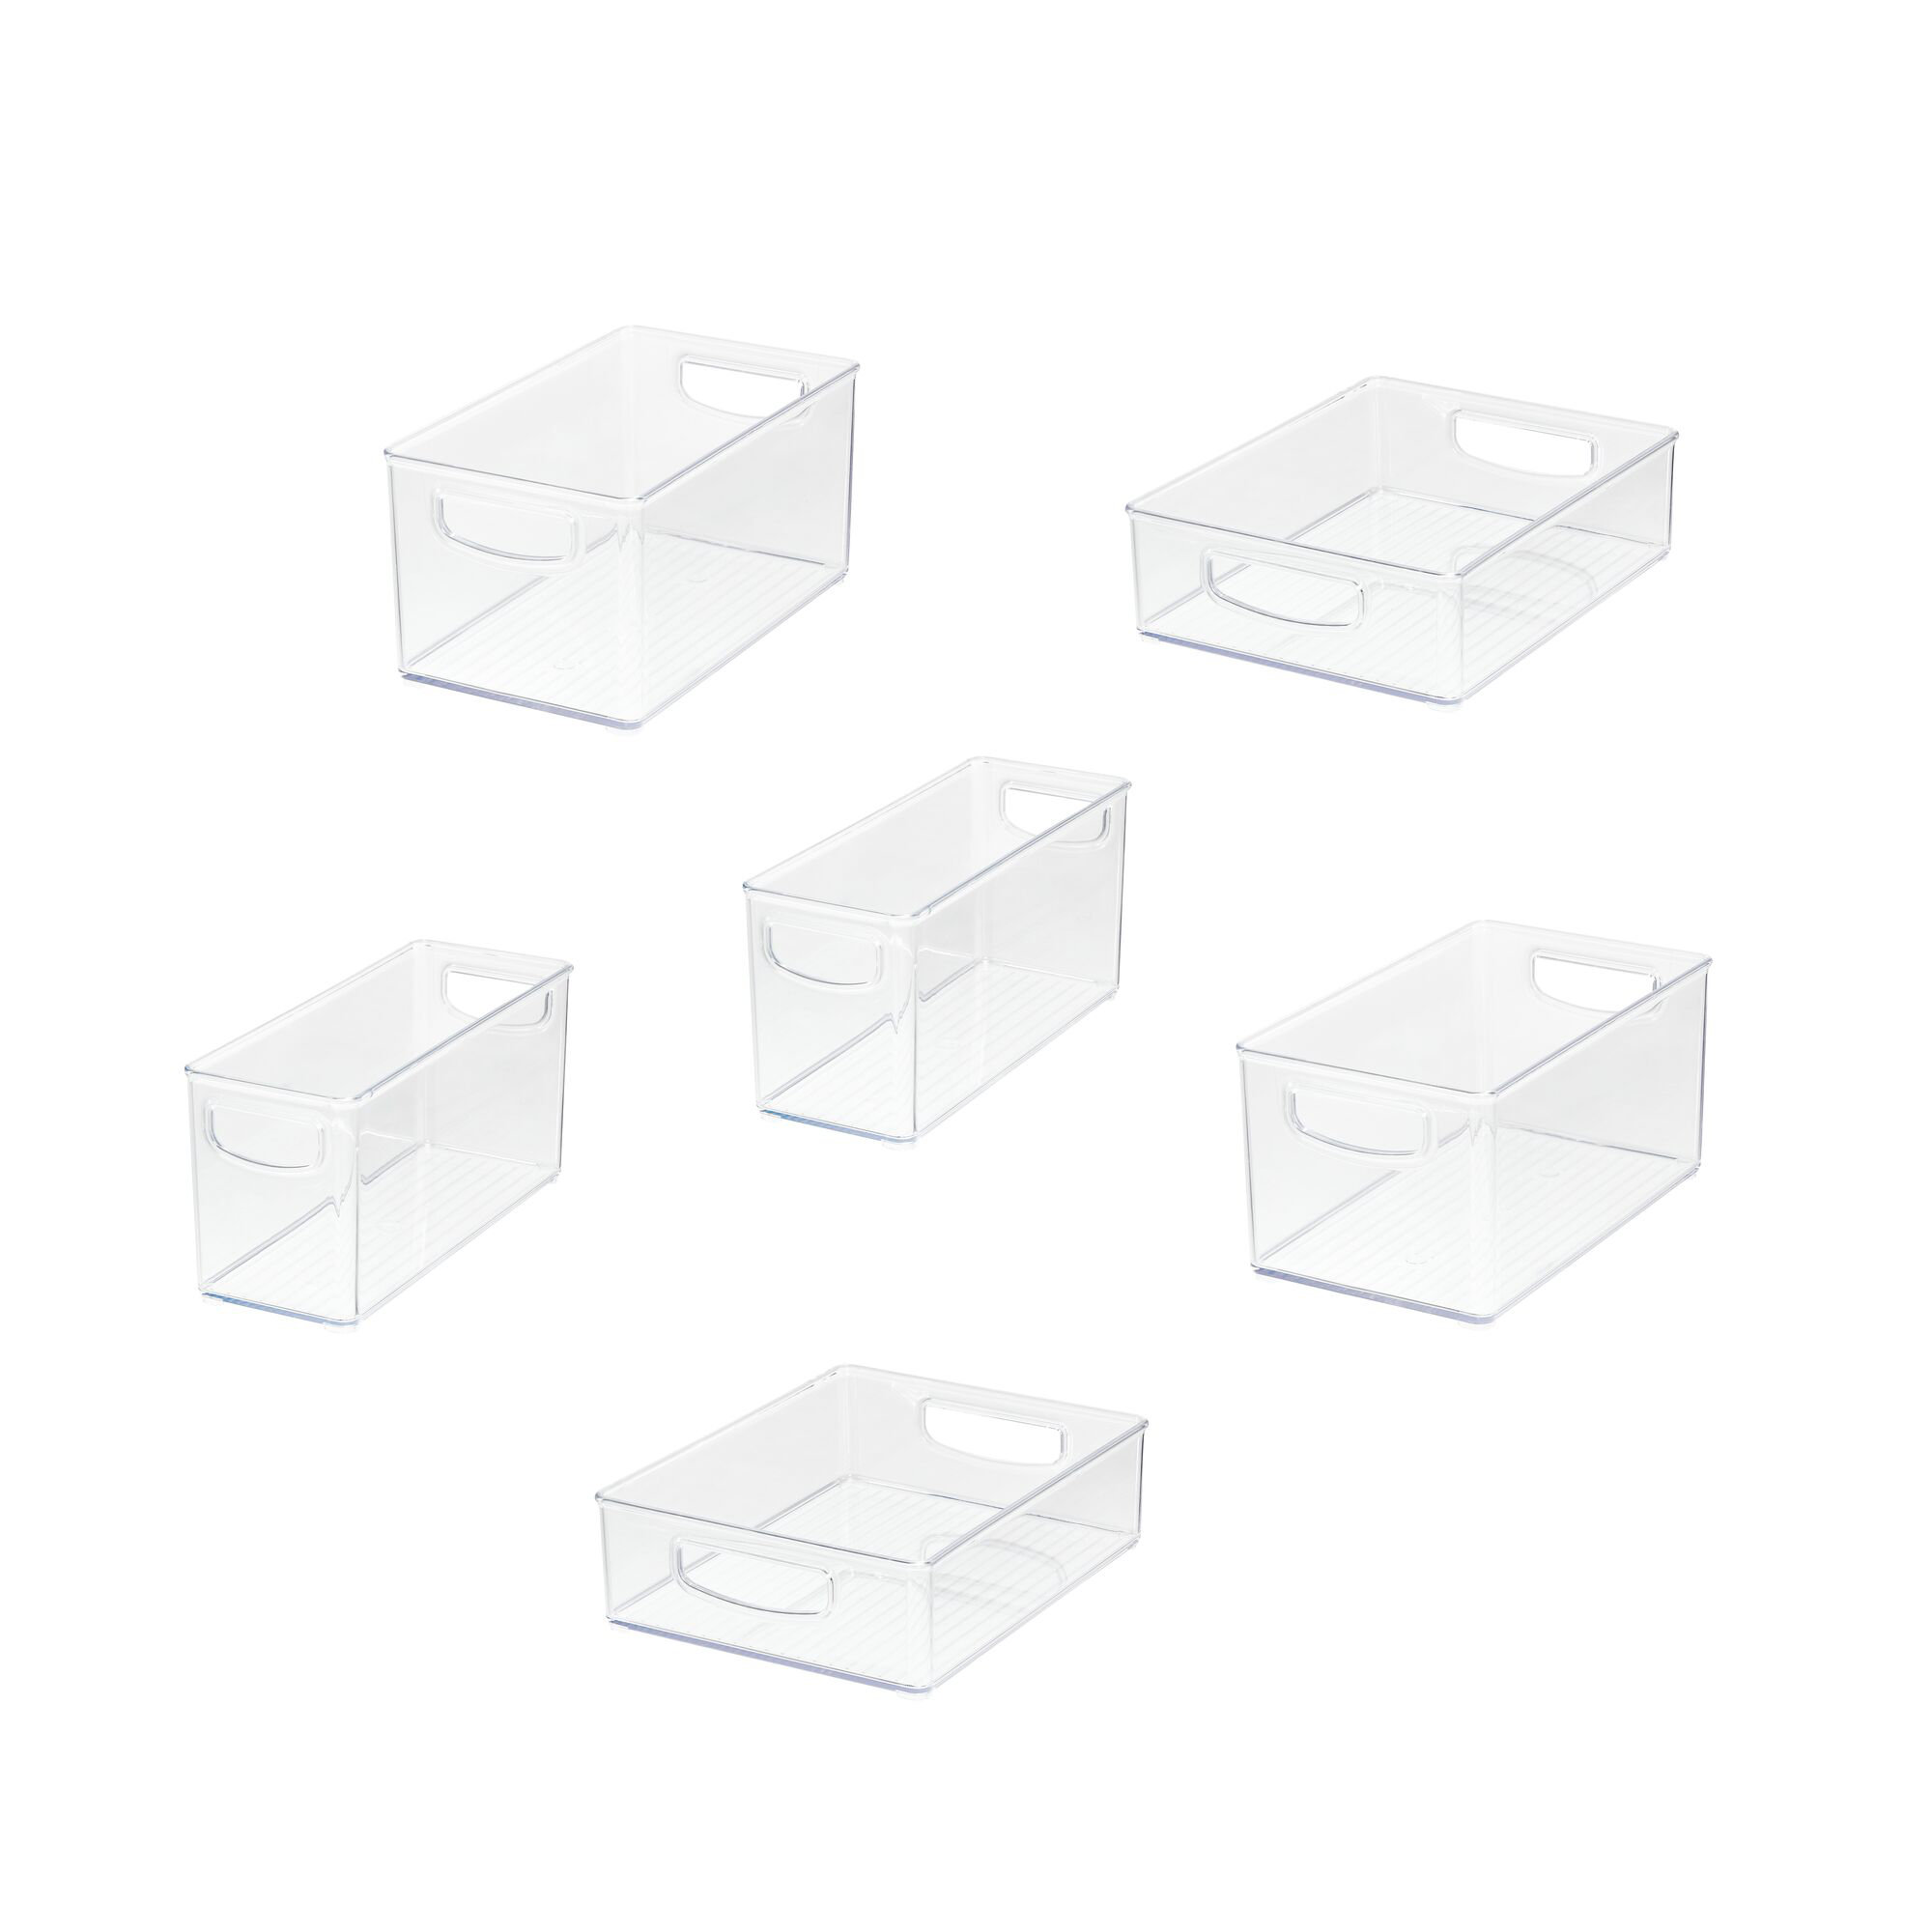 iDesign Crisp 4-Piece Recycled Plastic Refrigerator Organizer Bin Set with Lids, Clear/White